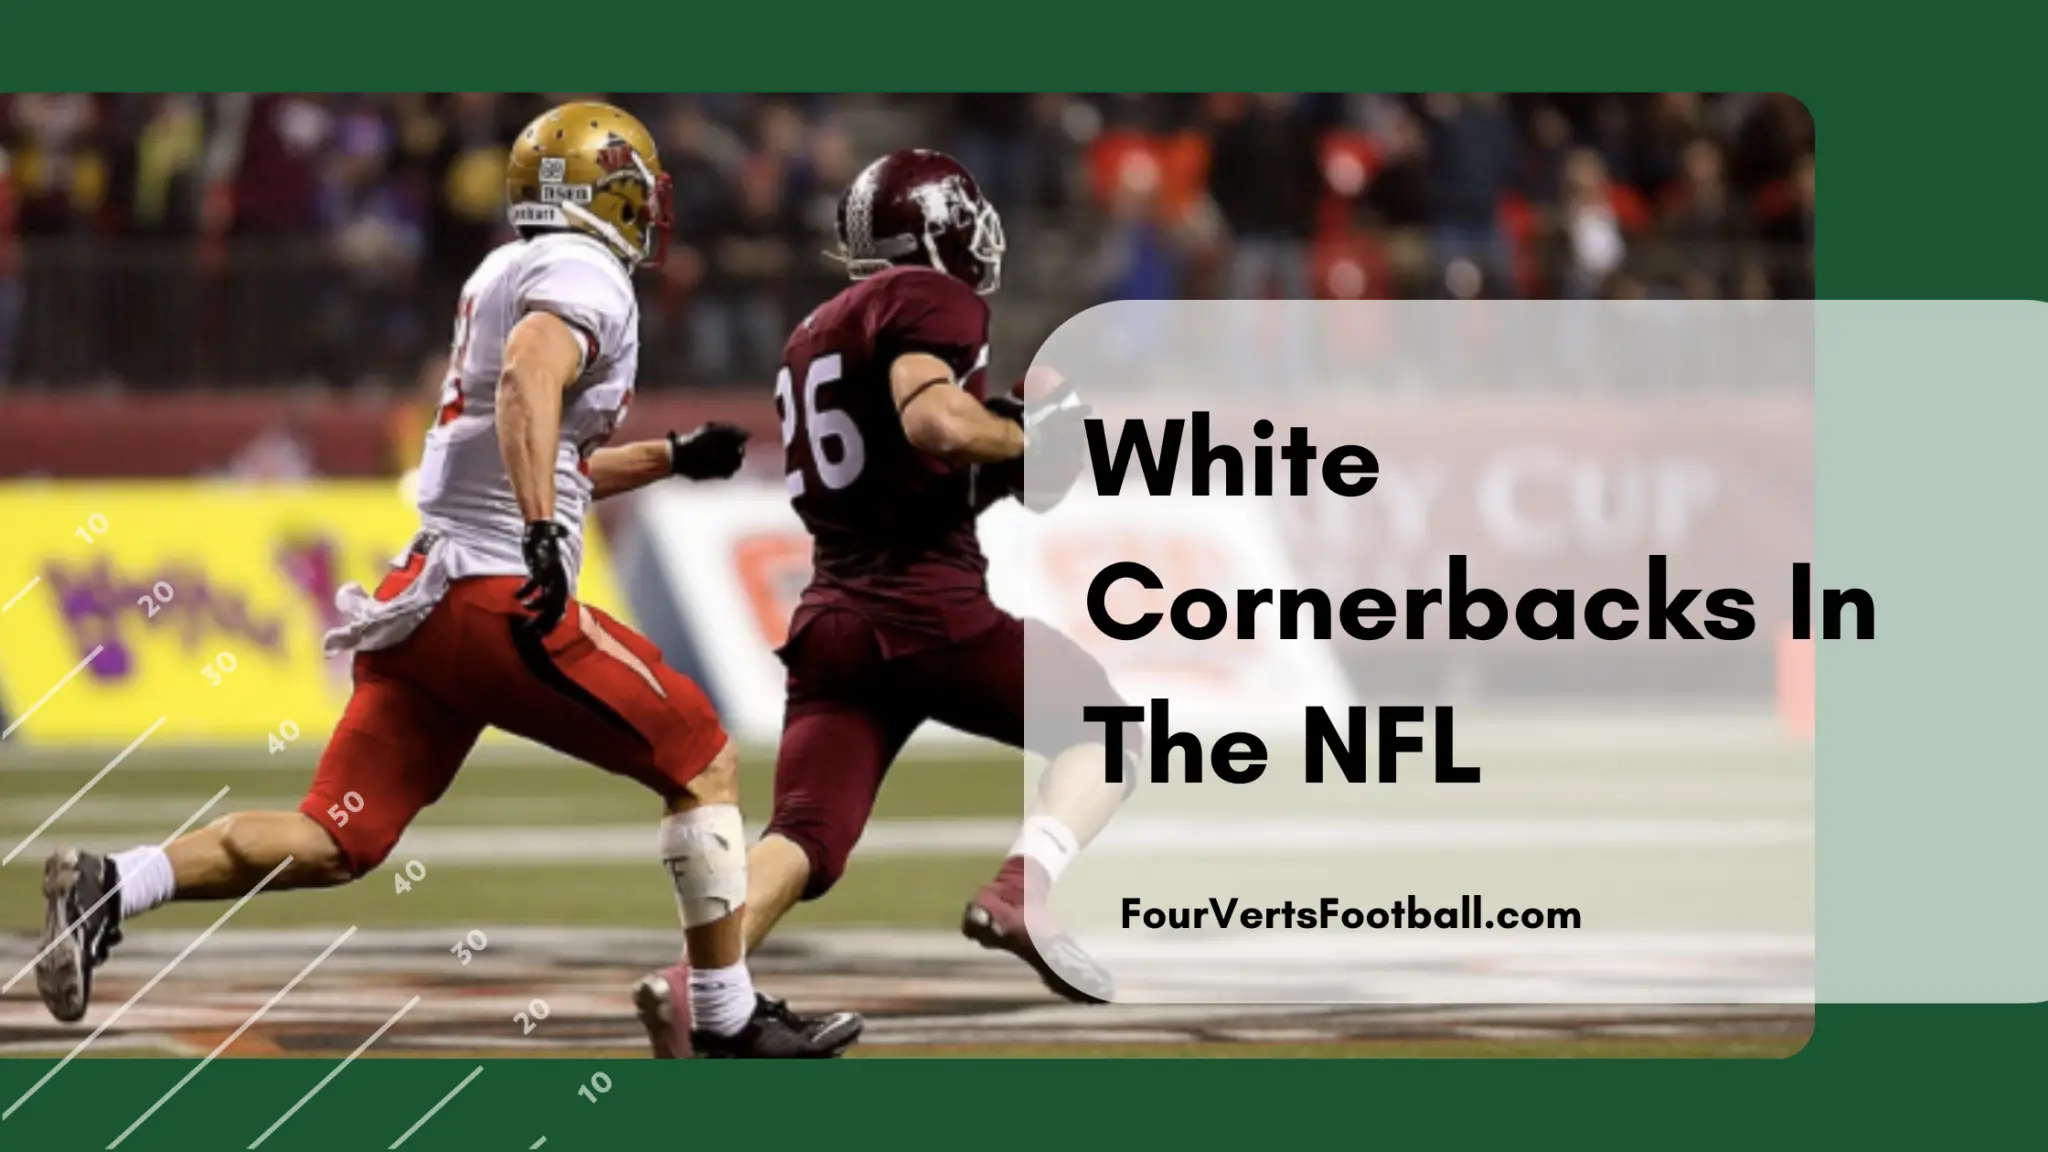 White Cornerbacks In The NFL Four Verts Football